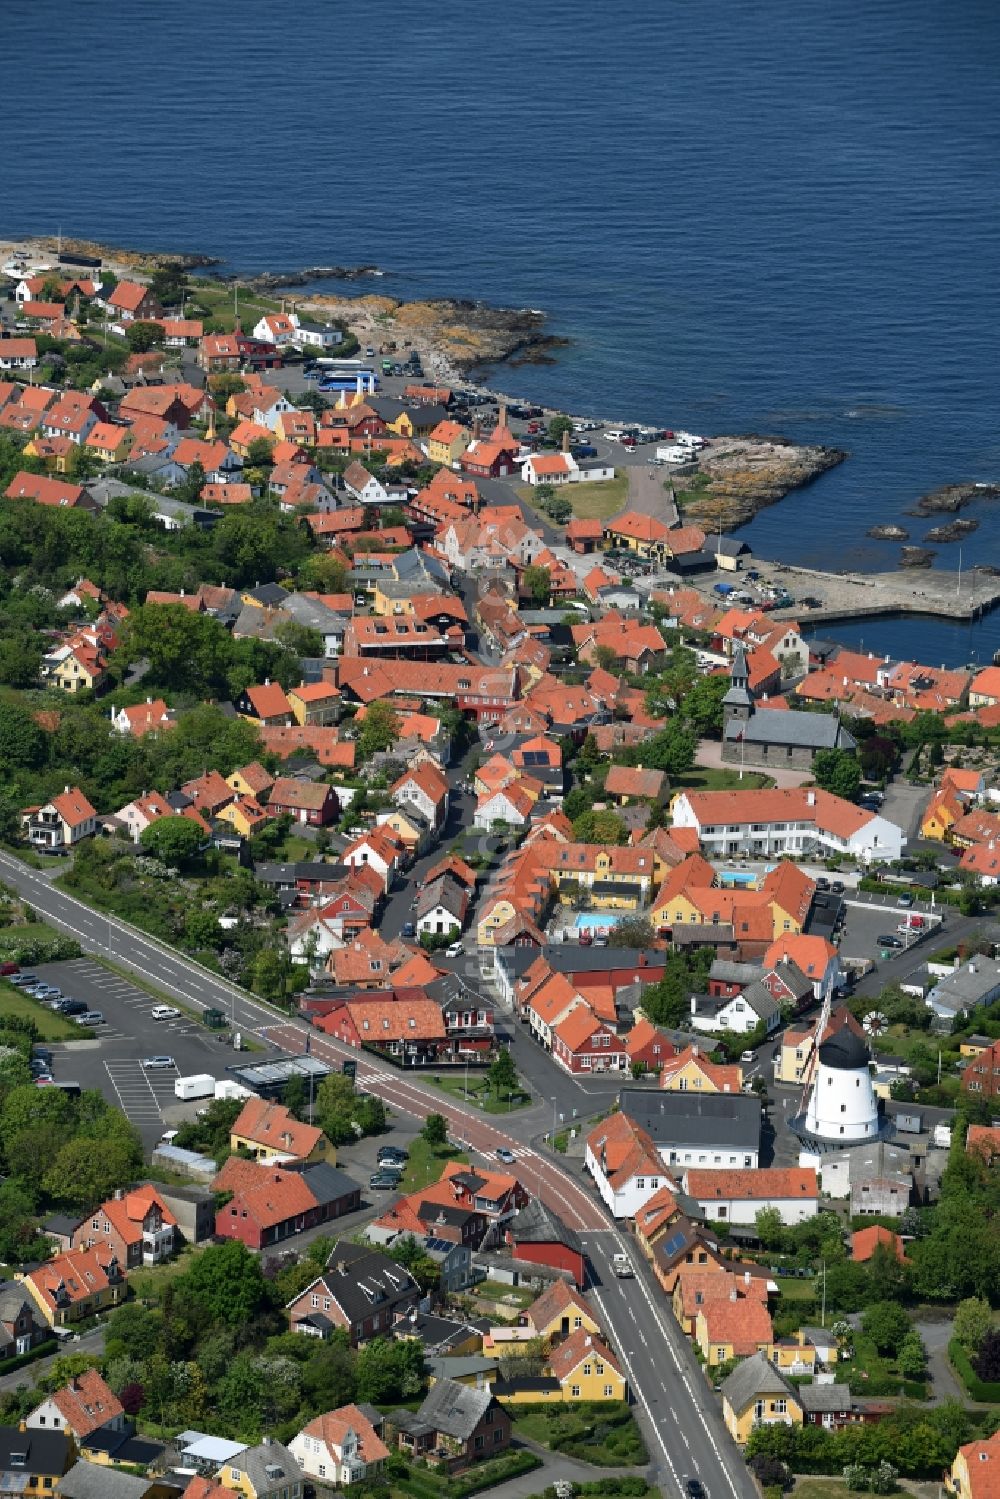 Luftbild Gudhjem - Stadtansicht vom Innenstadtbereich in Gudhjem in Region Hovedstaden, Dänemark